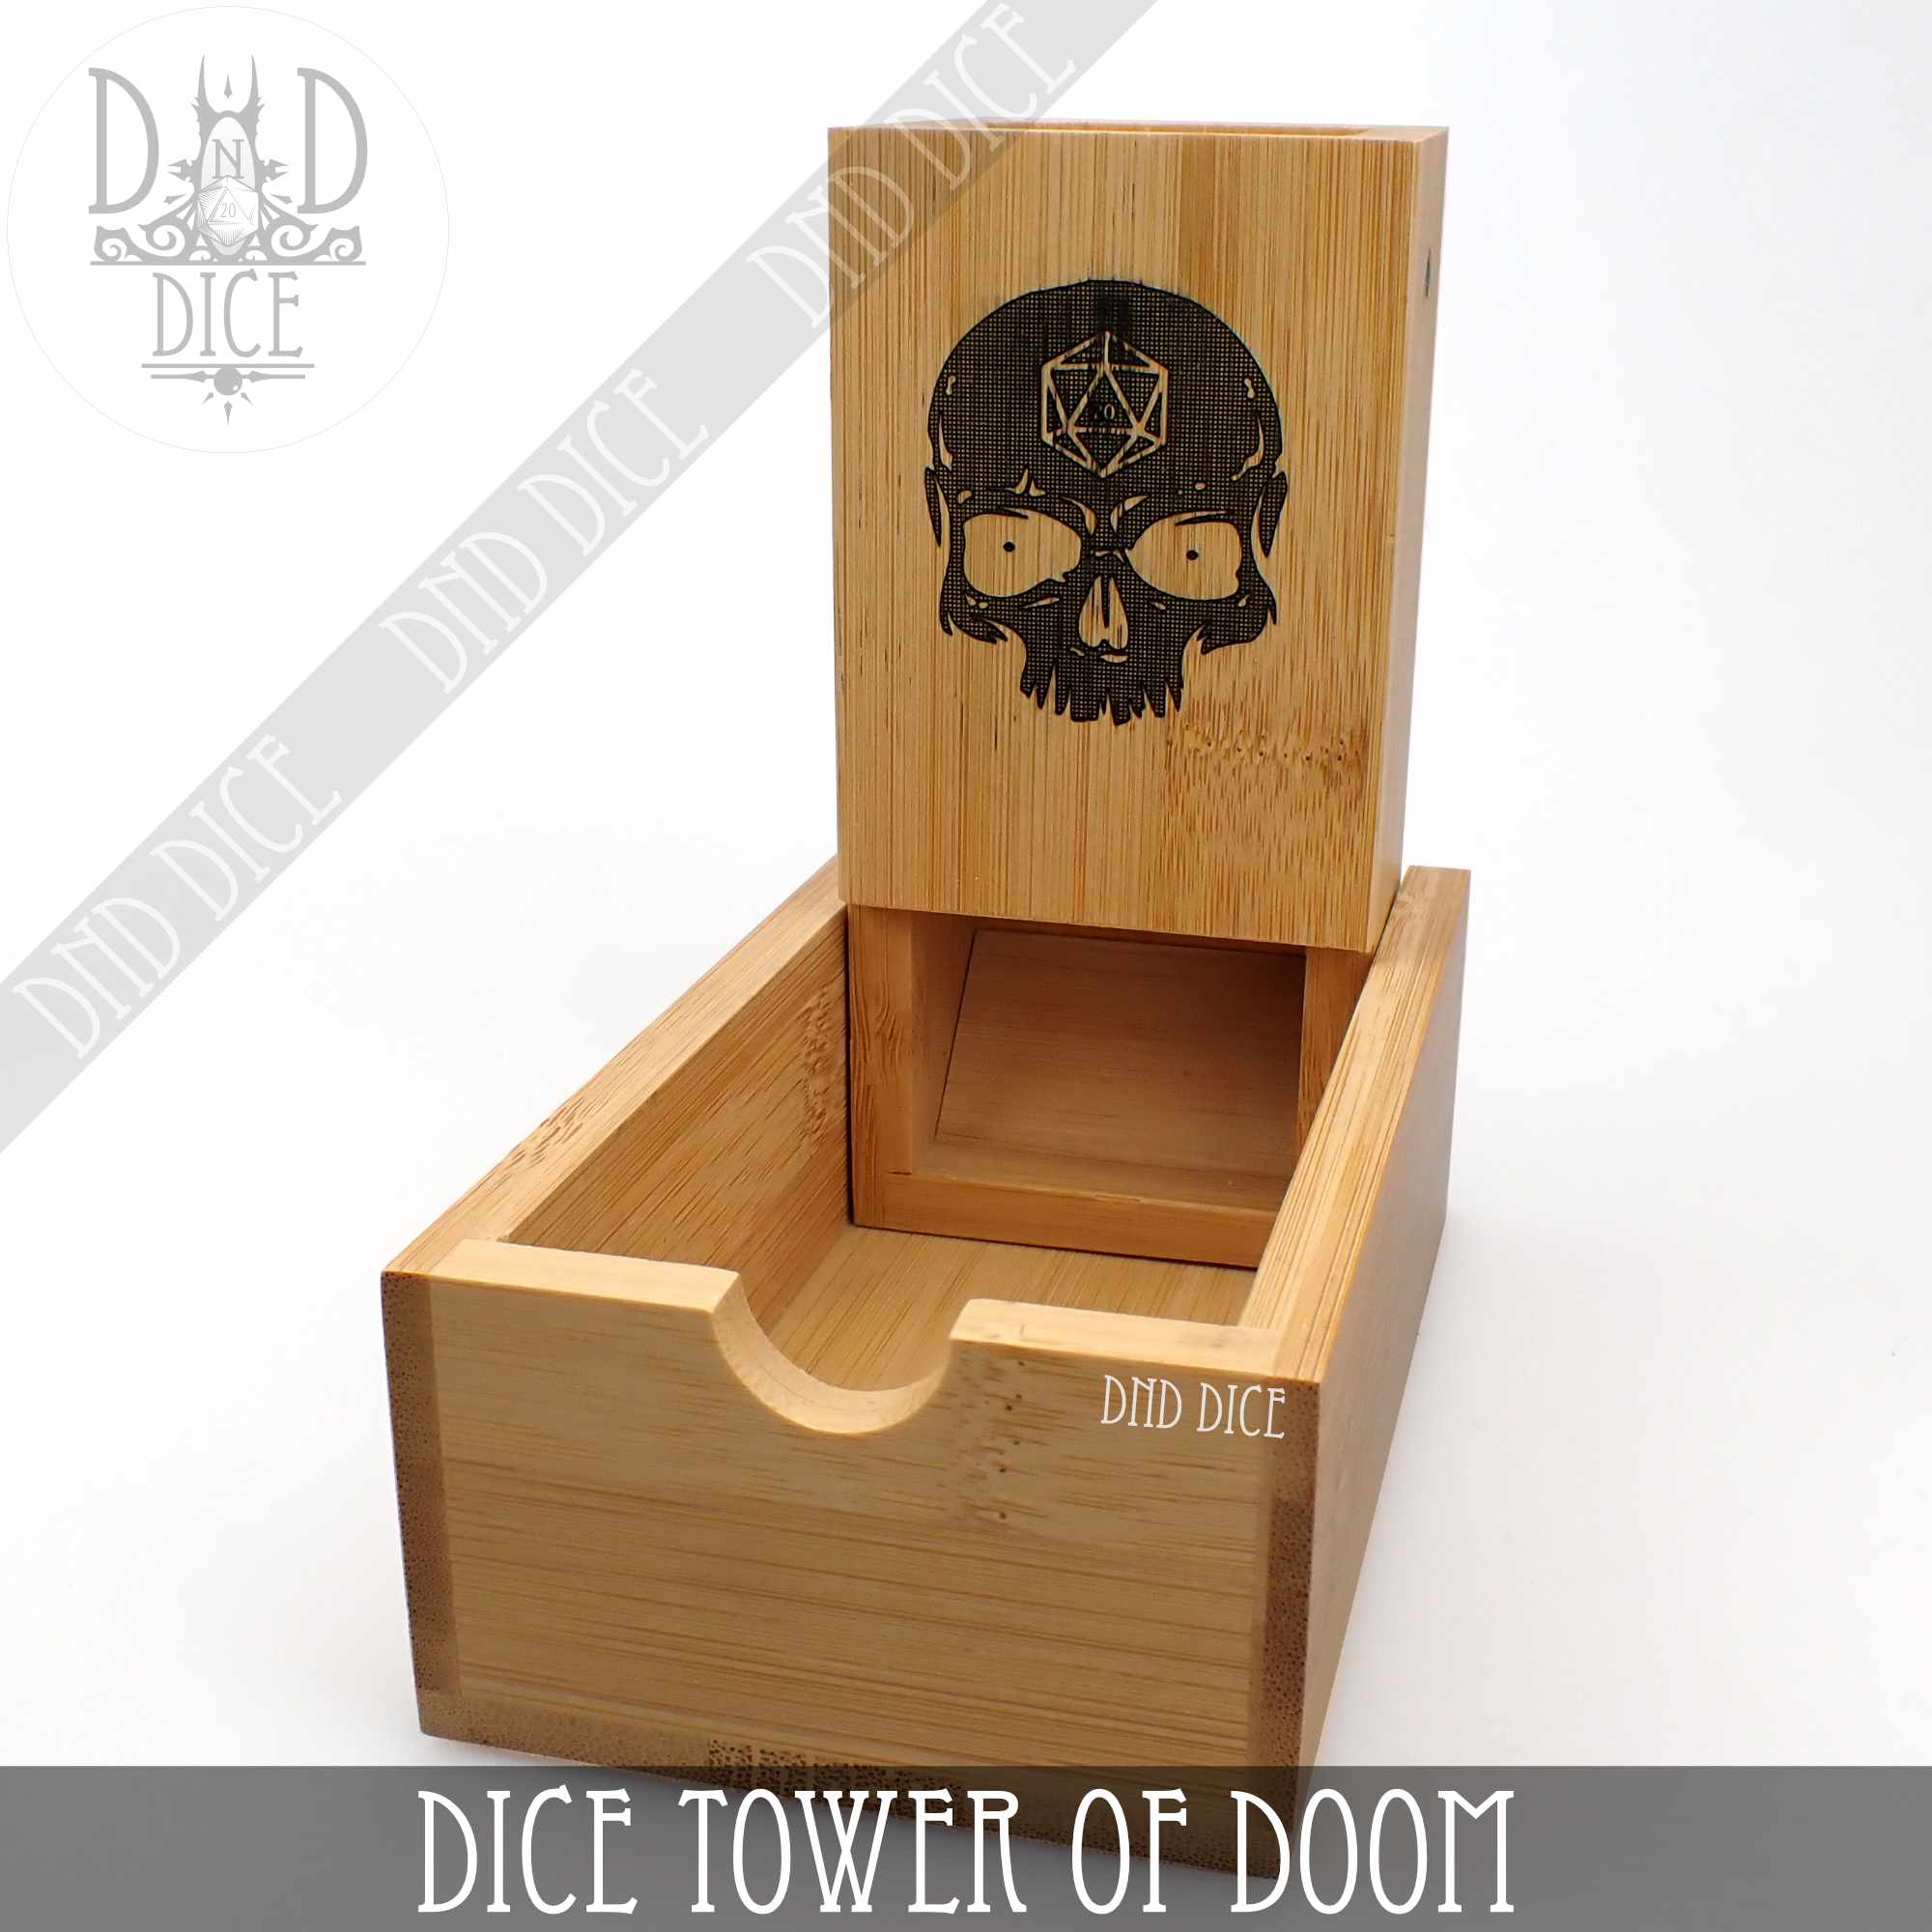 Dice Tower of Doom